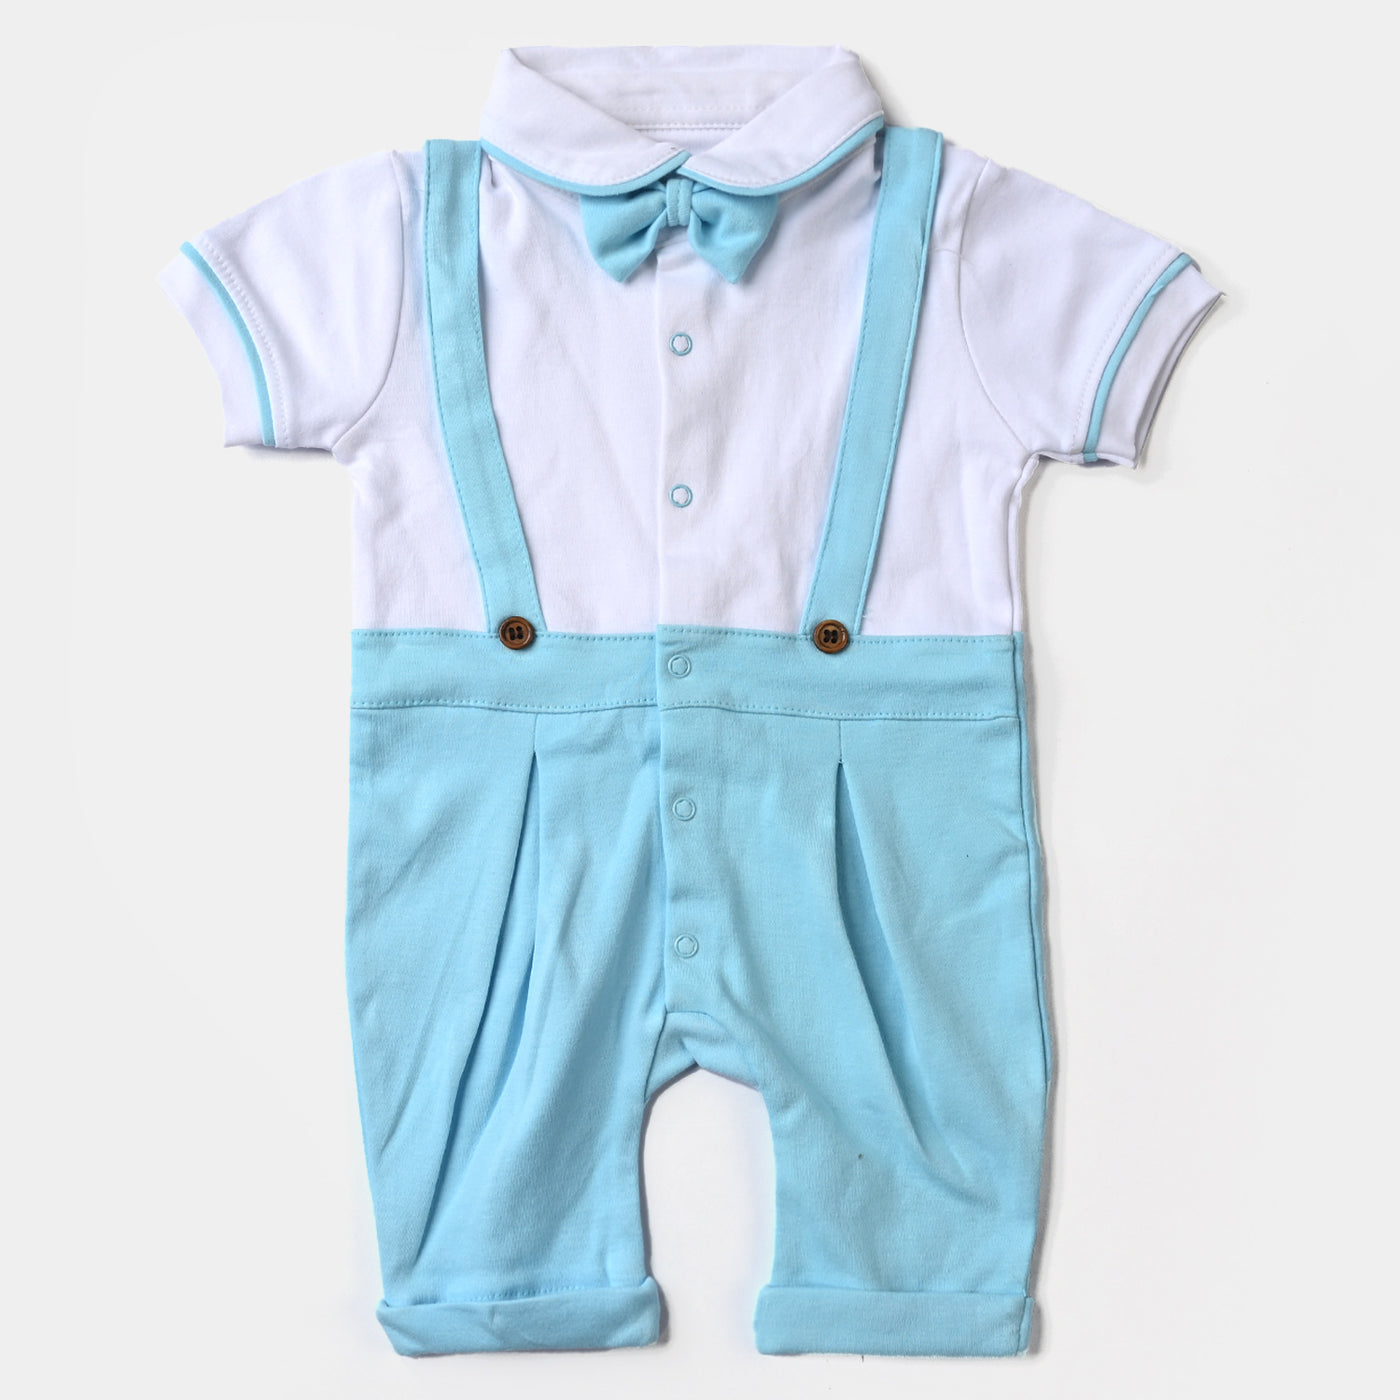 Infant Boys Cotton Interlock Knitted Romper Bow Suspender-White